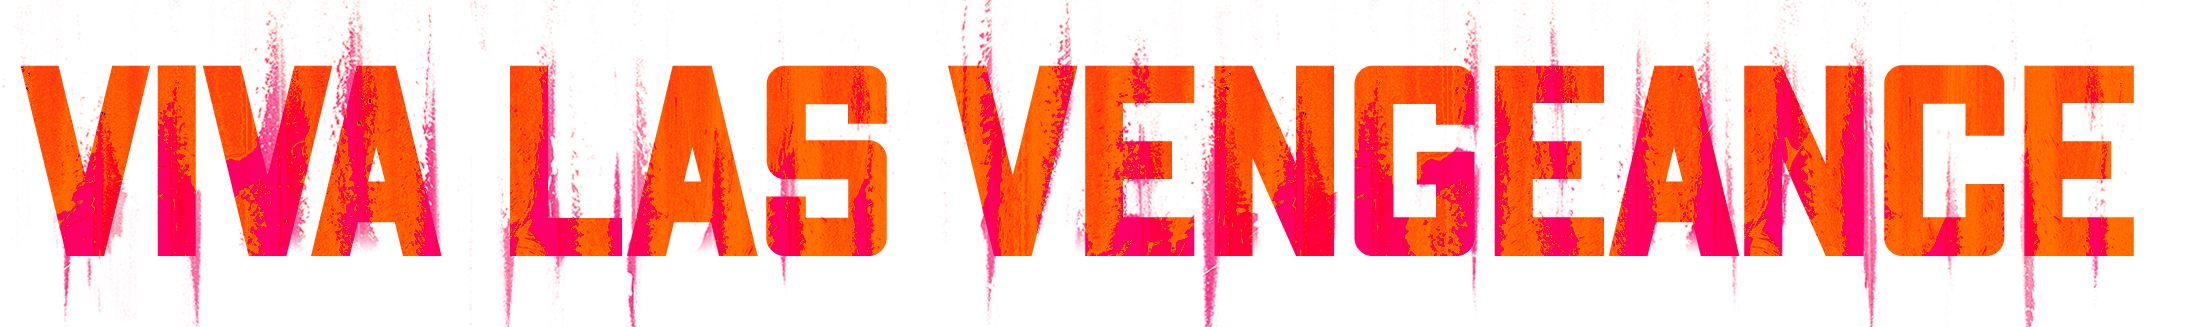 Army of the Dead - Viva Las Vengeance: A VR Experience Logo